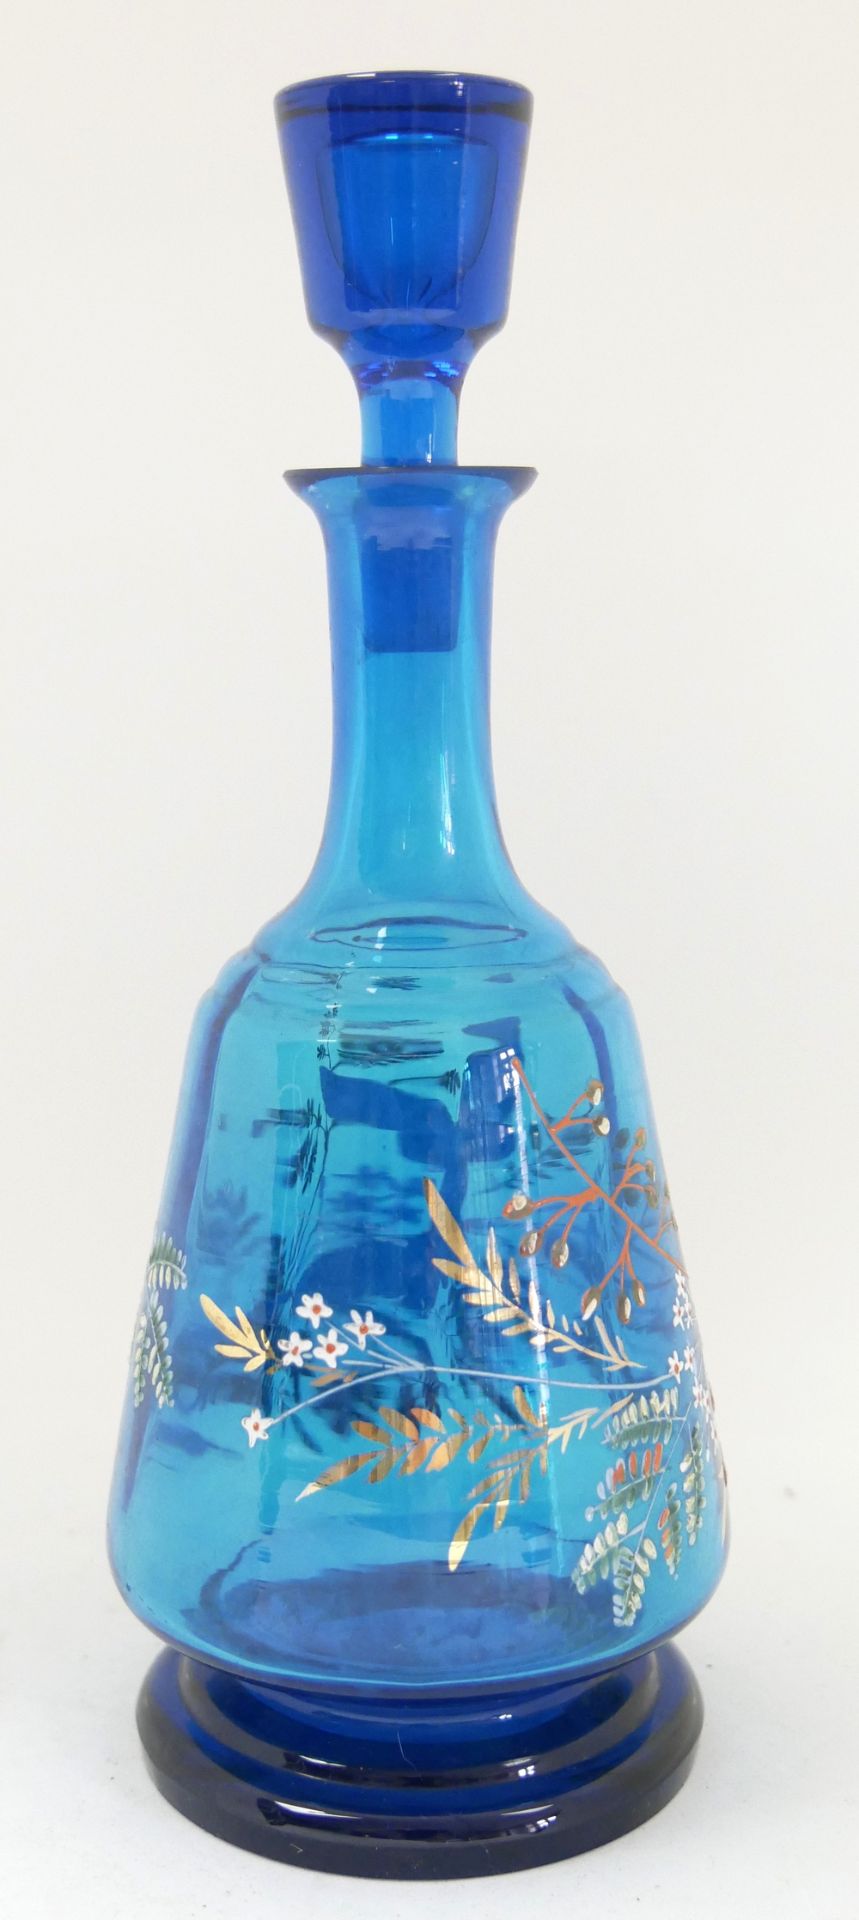 Jugendstil blaue Glaskaraffe mit Stöpsel. Mit Blumenmalerei und Schmetterlingen. Höhe ca. 22,5 cm - Image 2 of 2